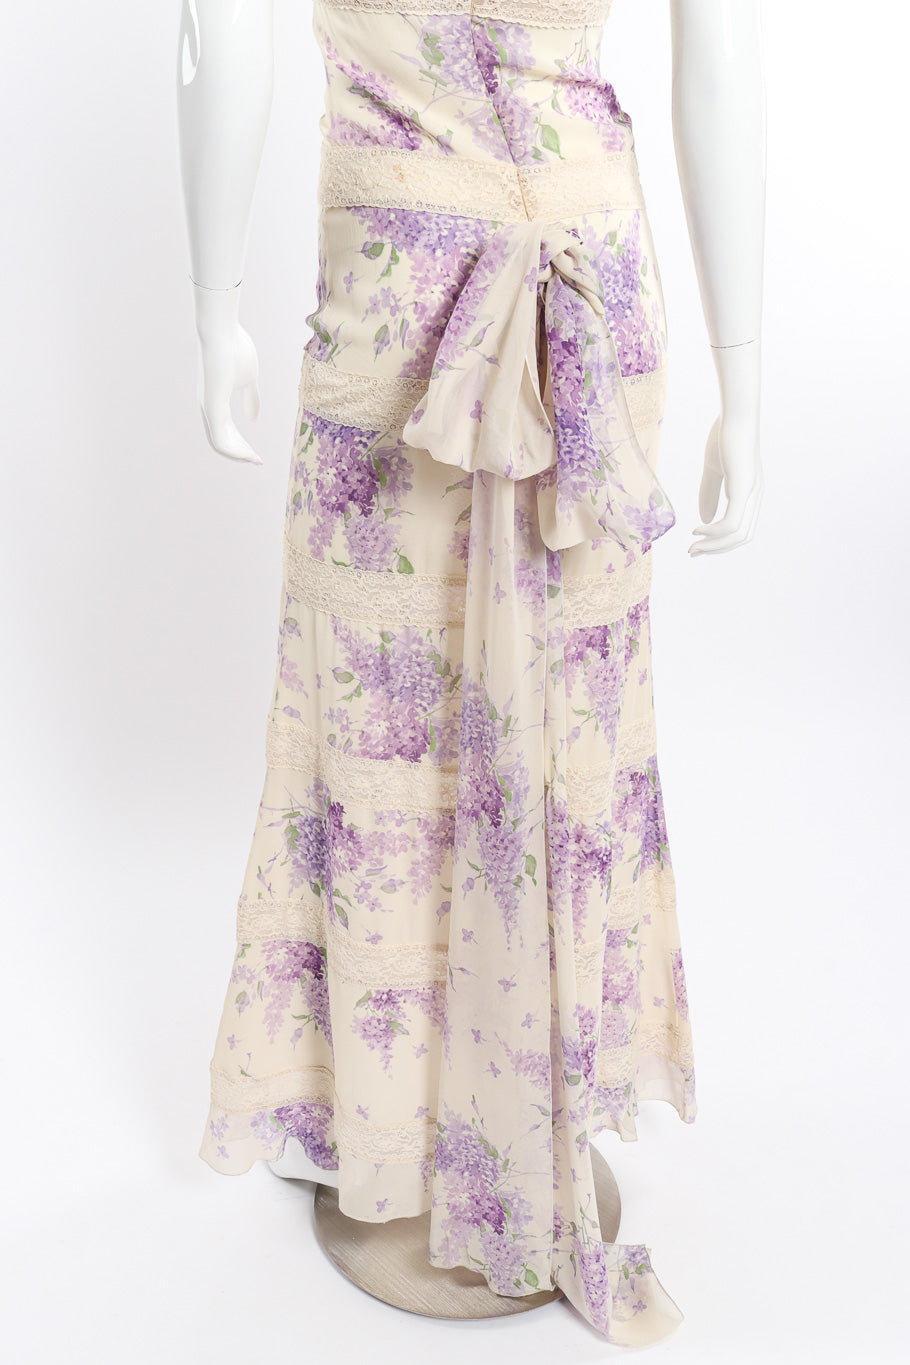 Vintage Valentino Floral Lace Maxi Dress back sash closeup @Recessla